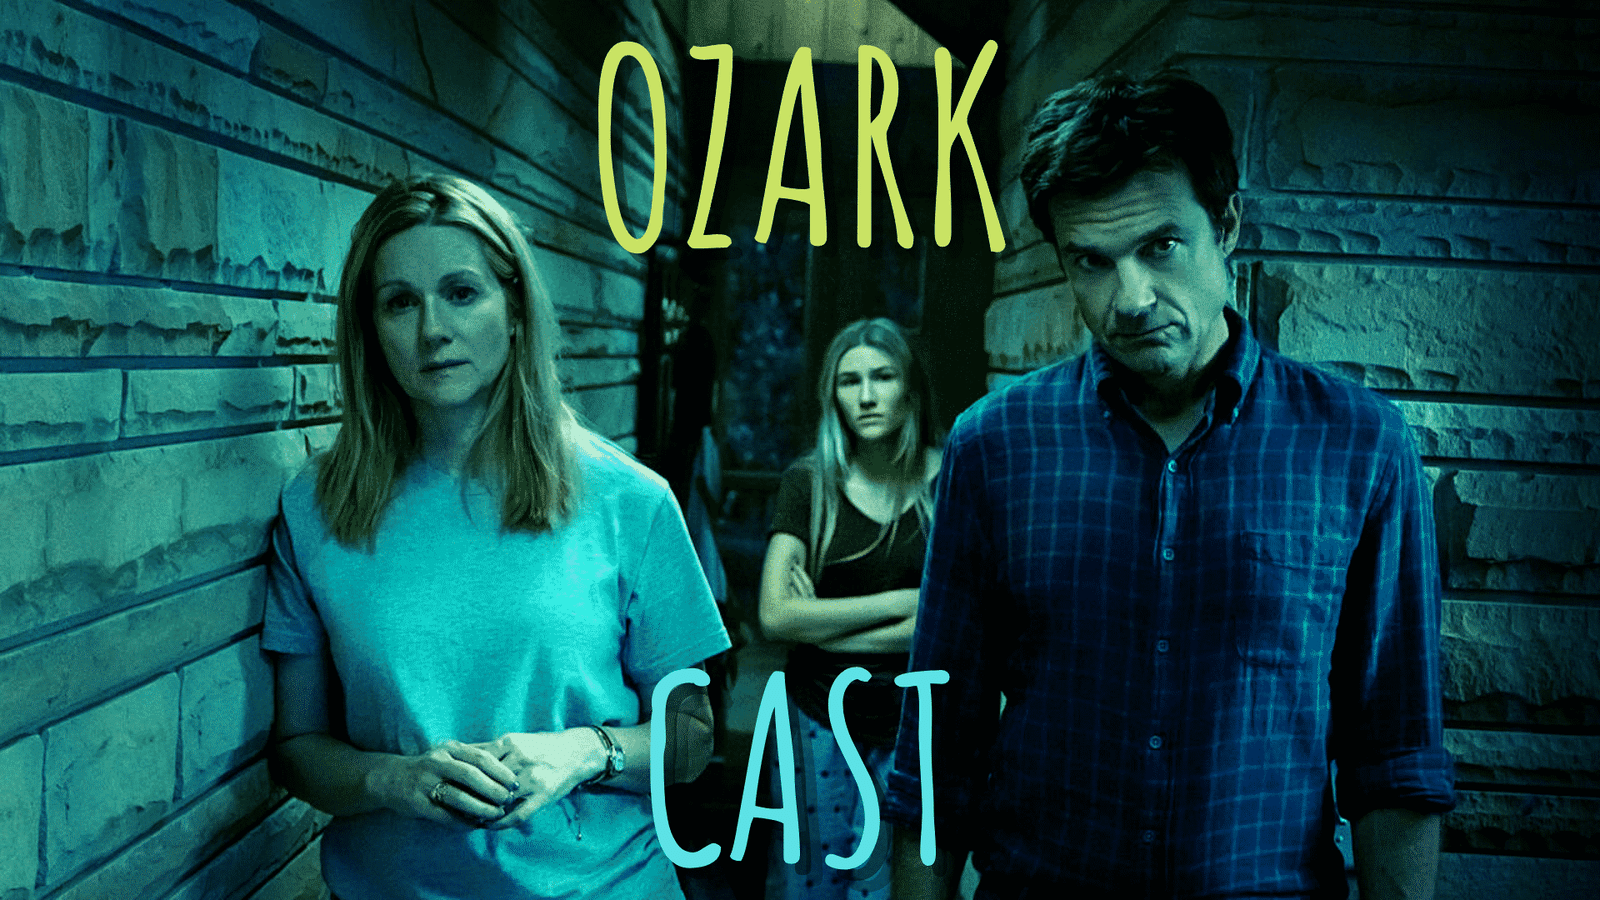 Ozark Cast Poster.